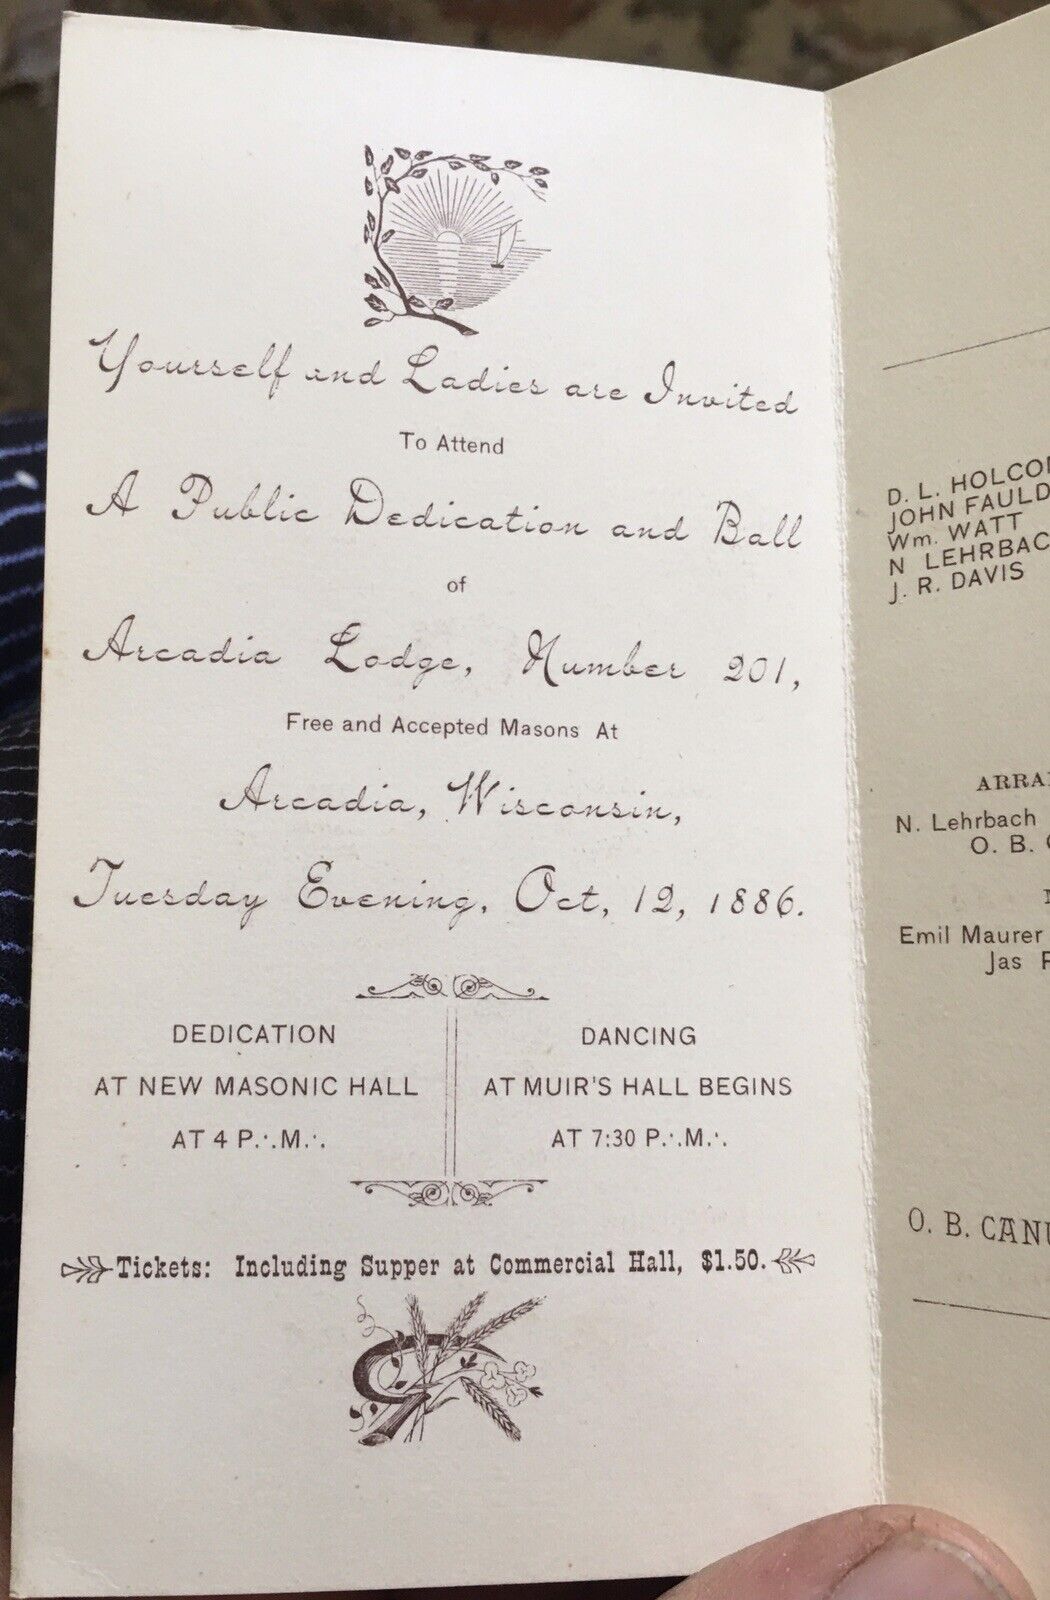 October 1886 Arcadia, Wisconsin Masonic Hall Public Dedication & Ball Invitation